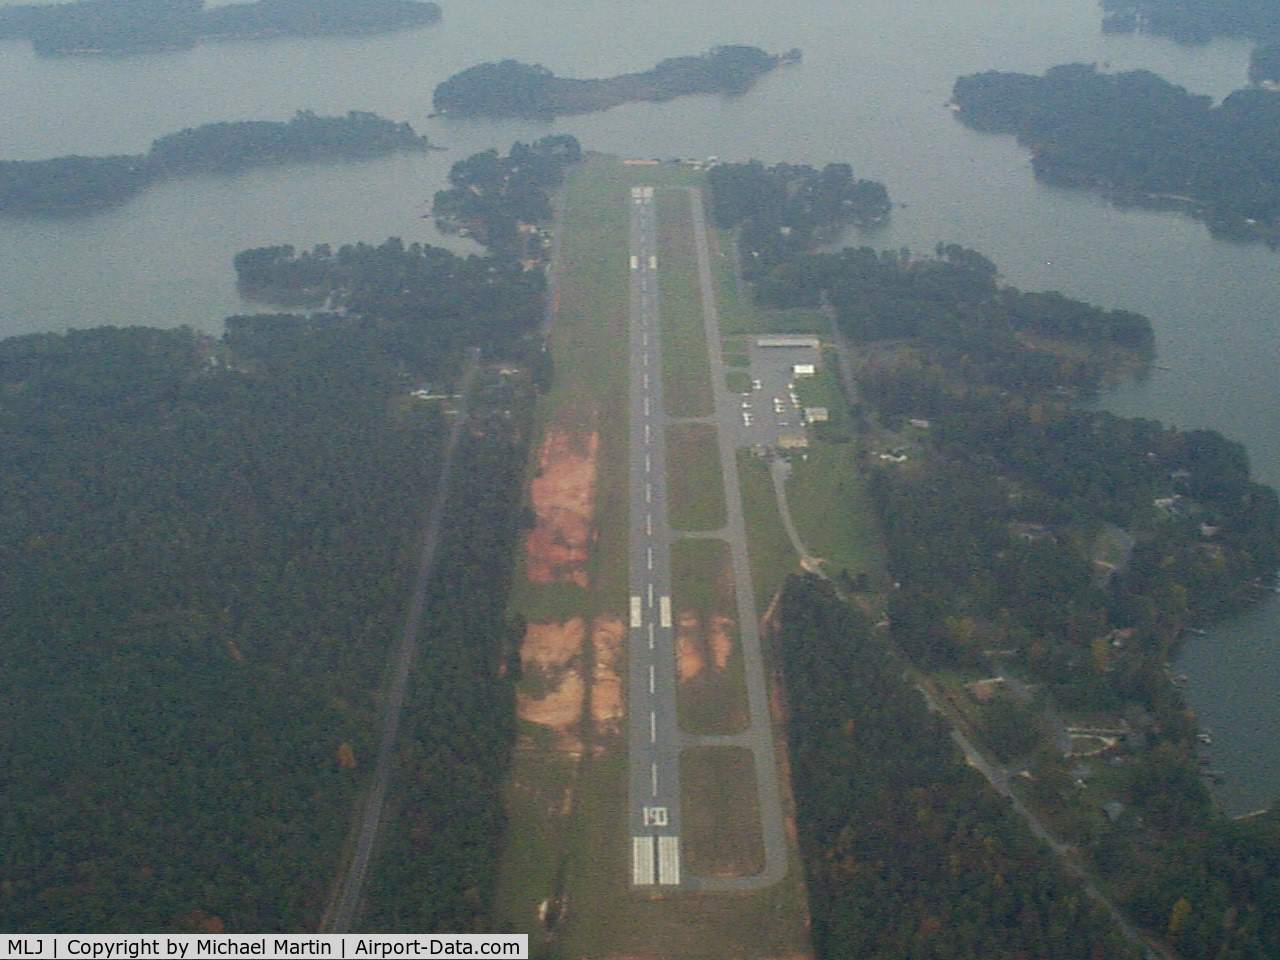 Baldwin County Airport (MLJ) - Baldwin County Airport - DON'T overrun the field!